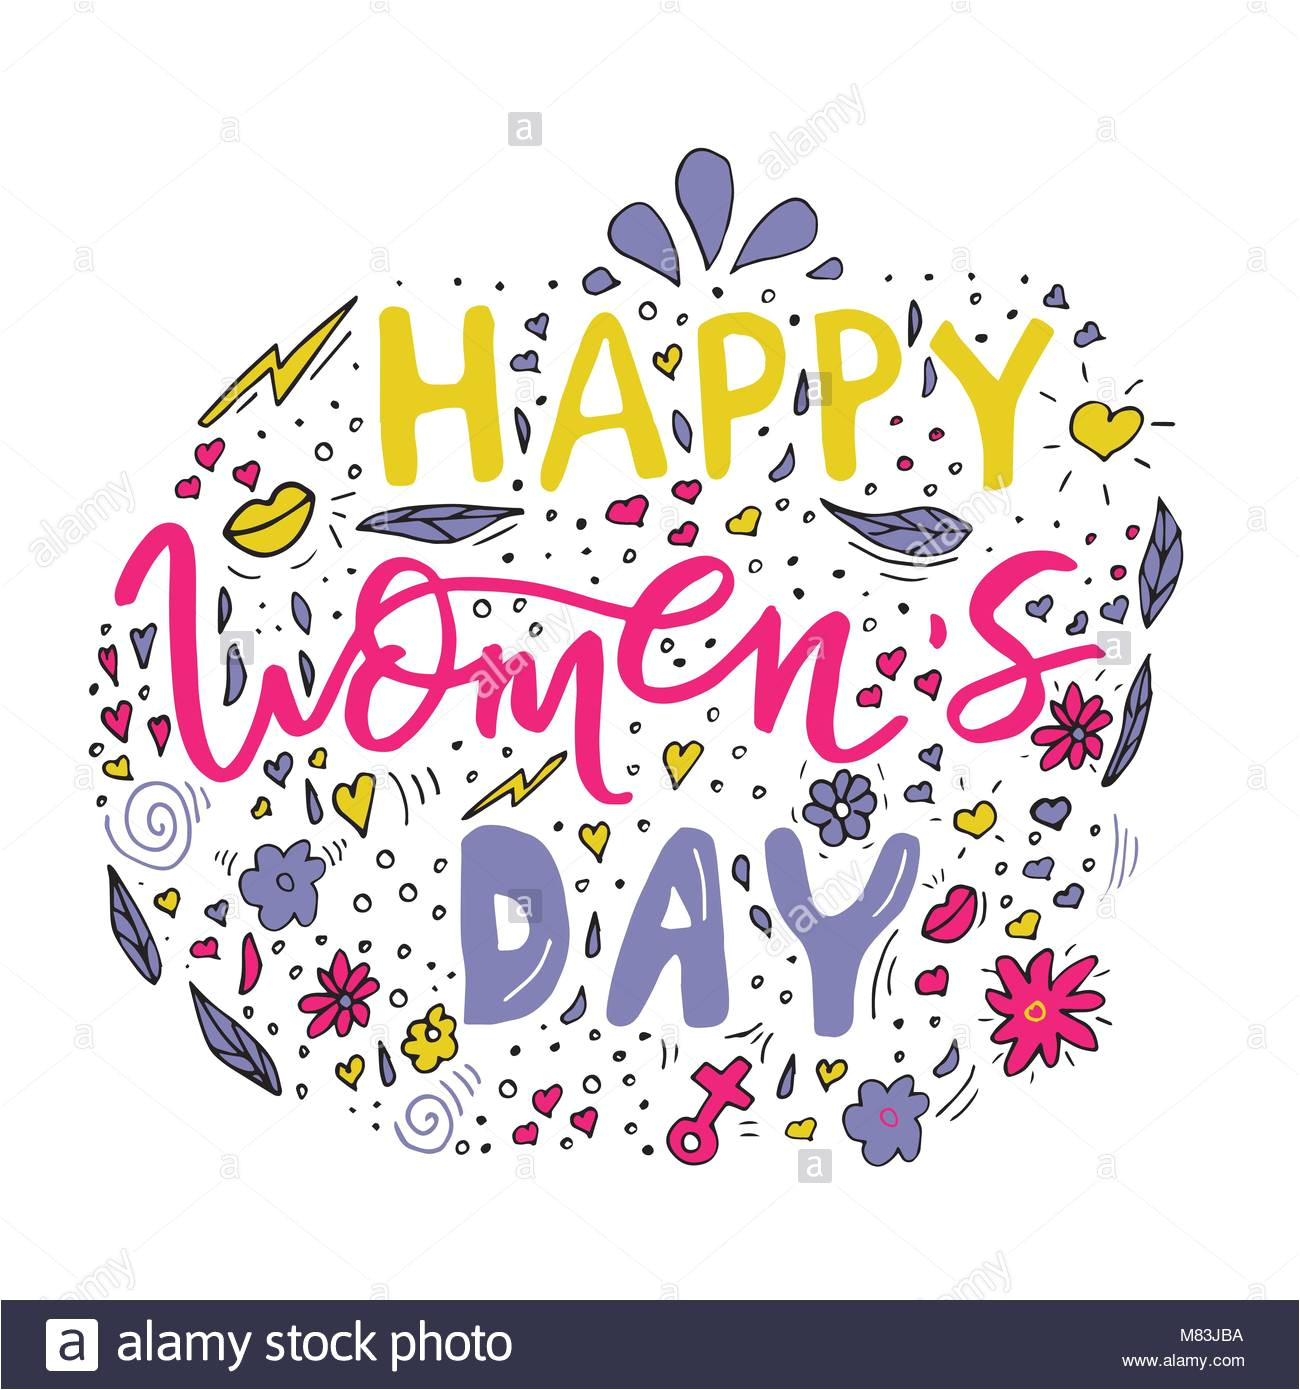 beautiful card design for happy womens day celebration postcard for m83jba jpg